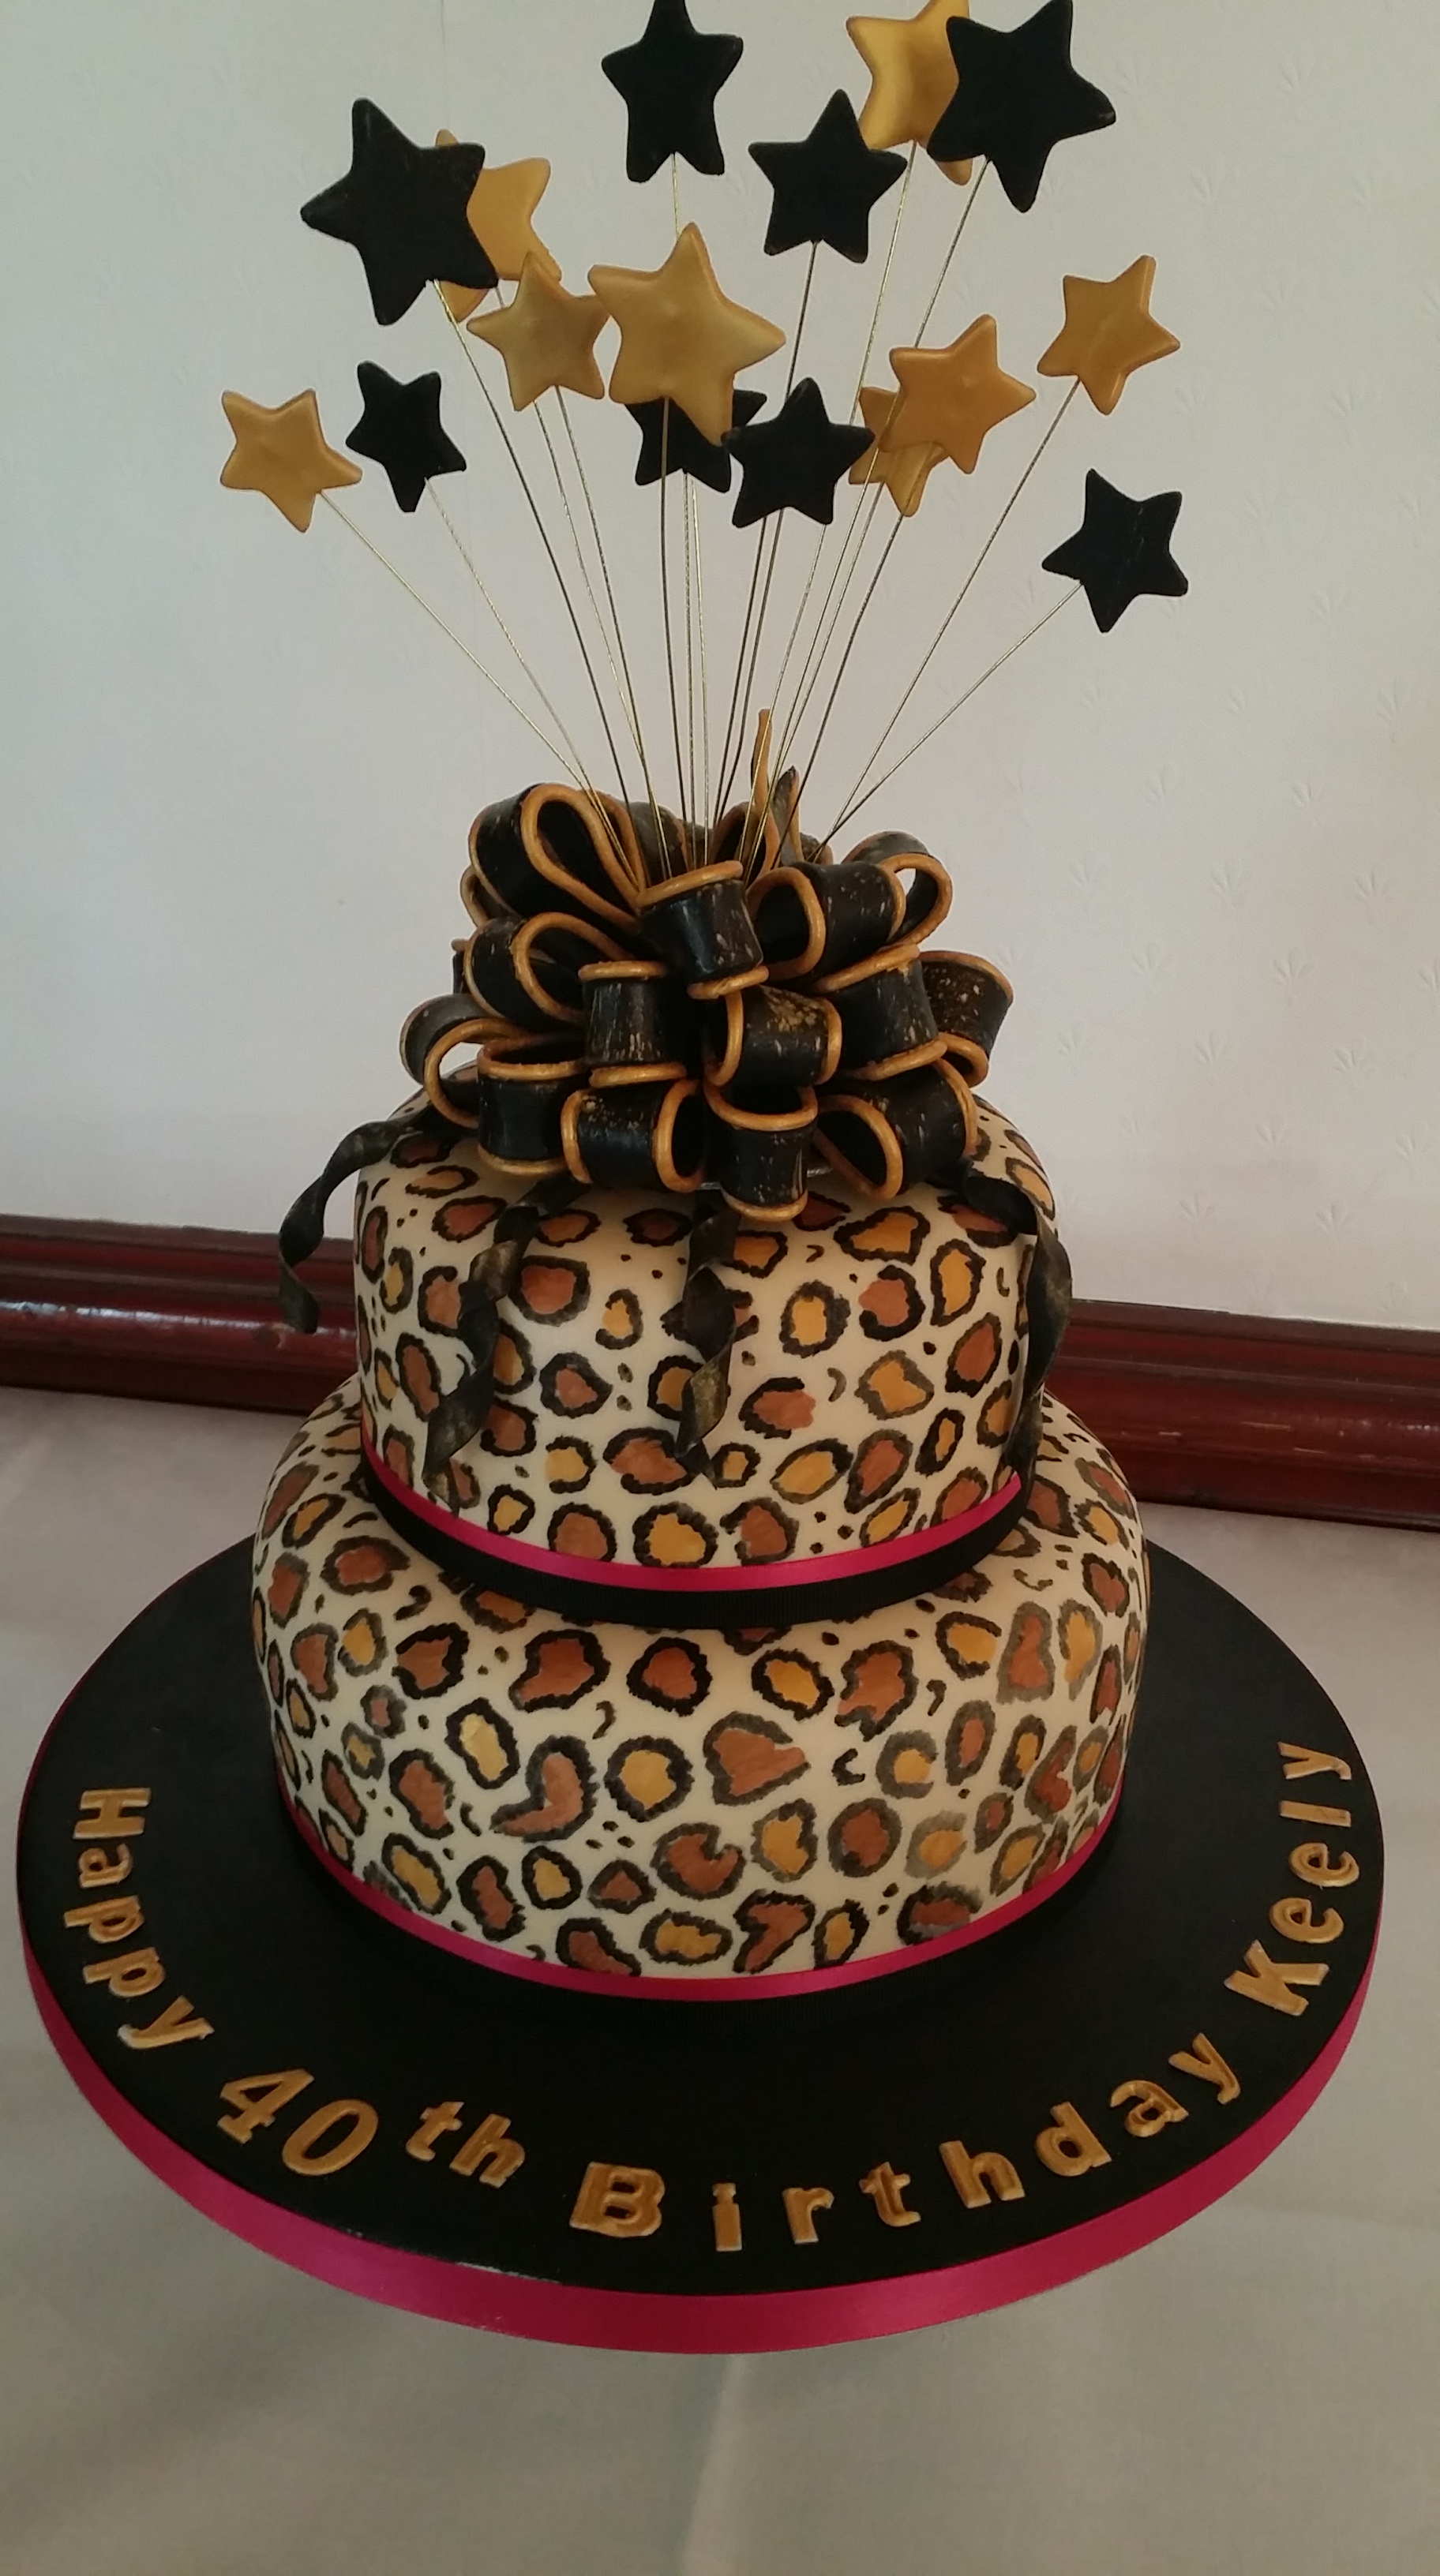 2014 Cake